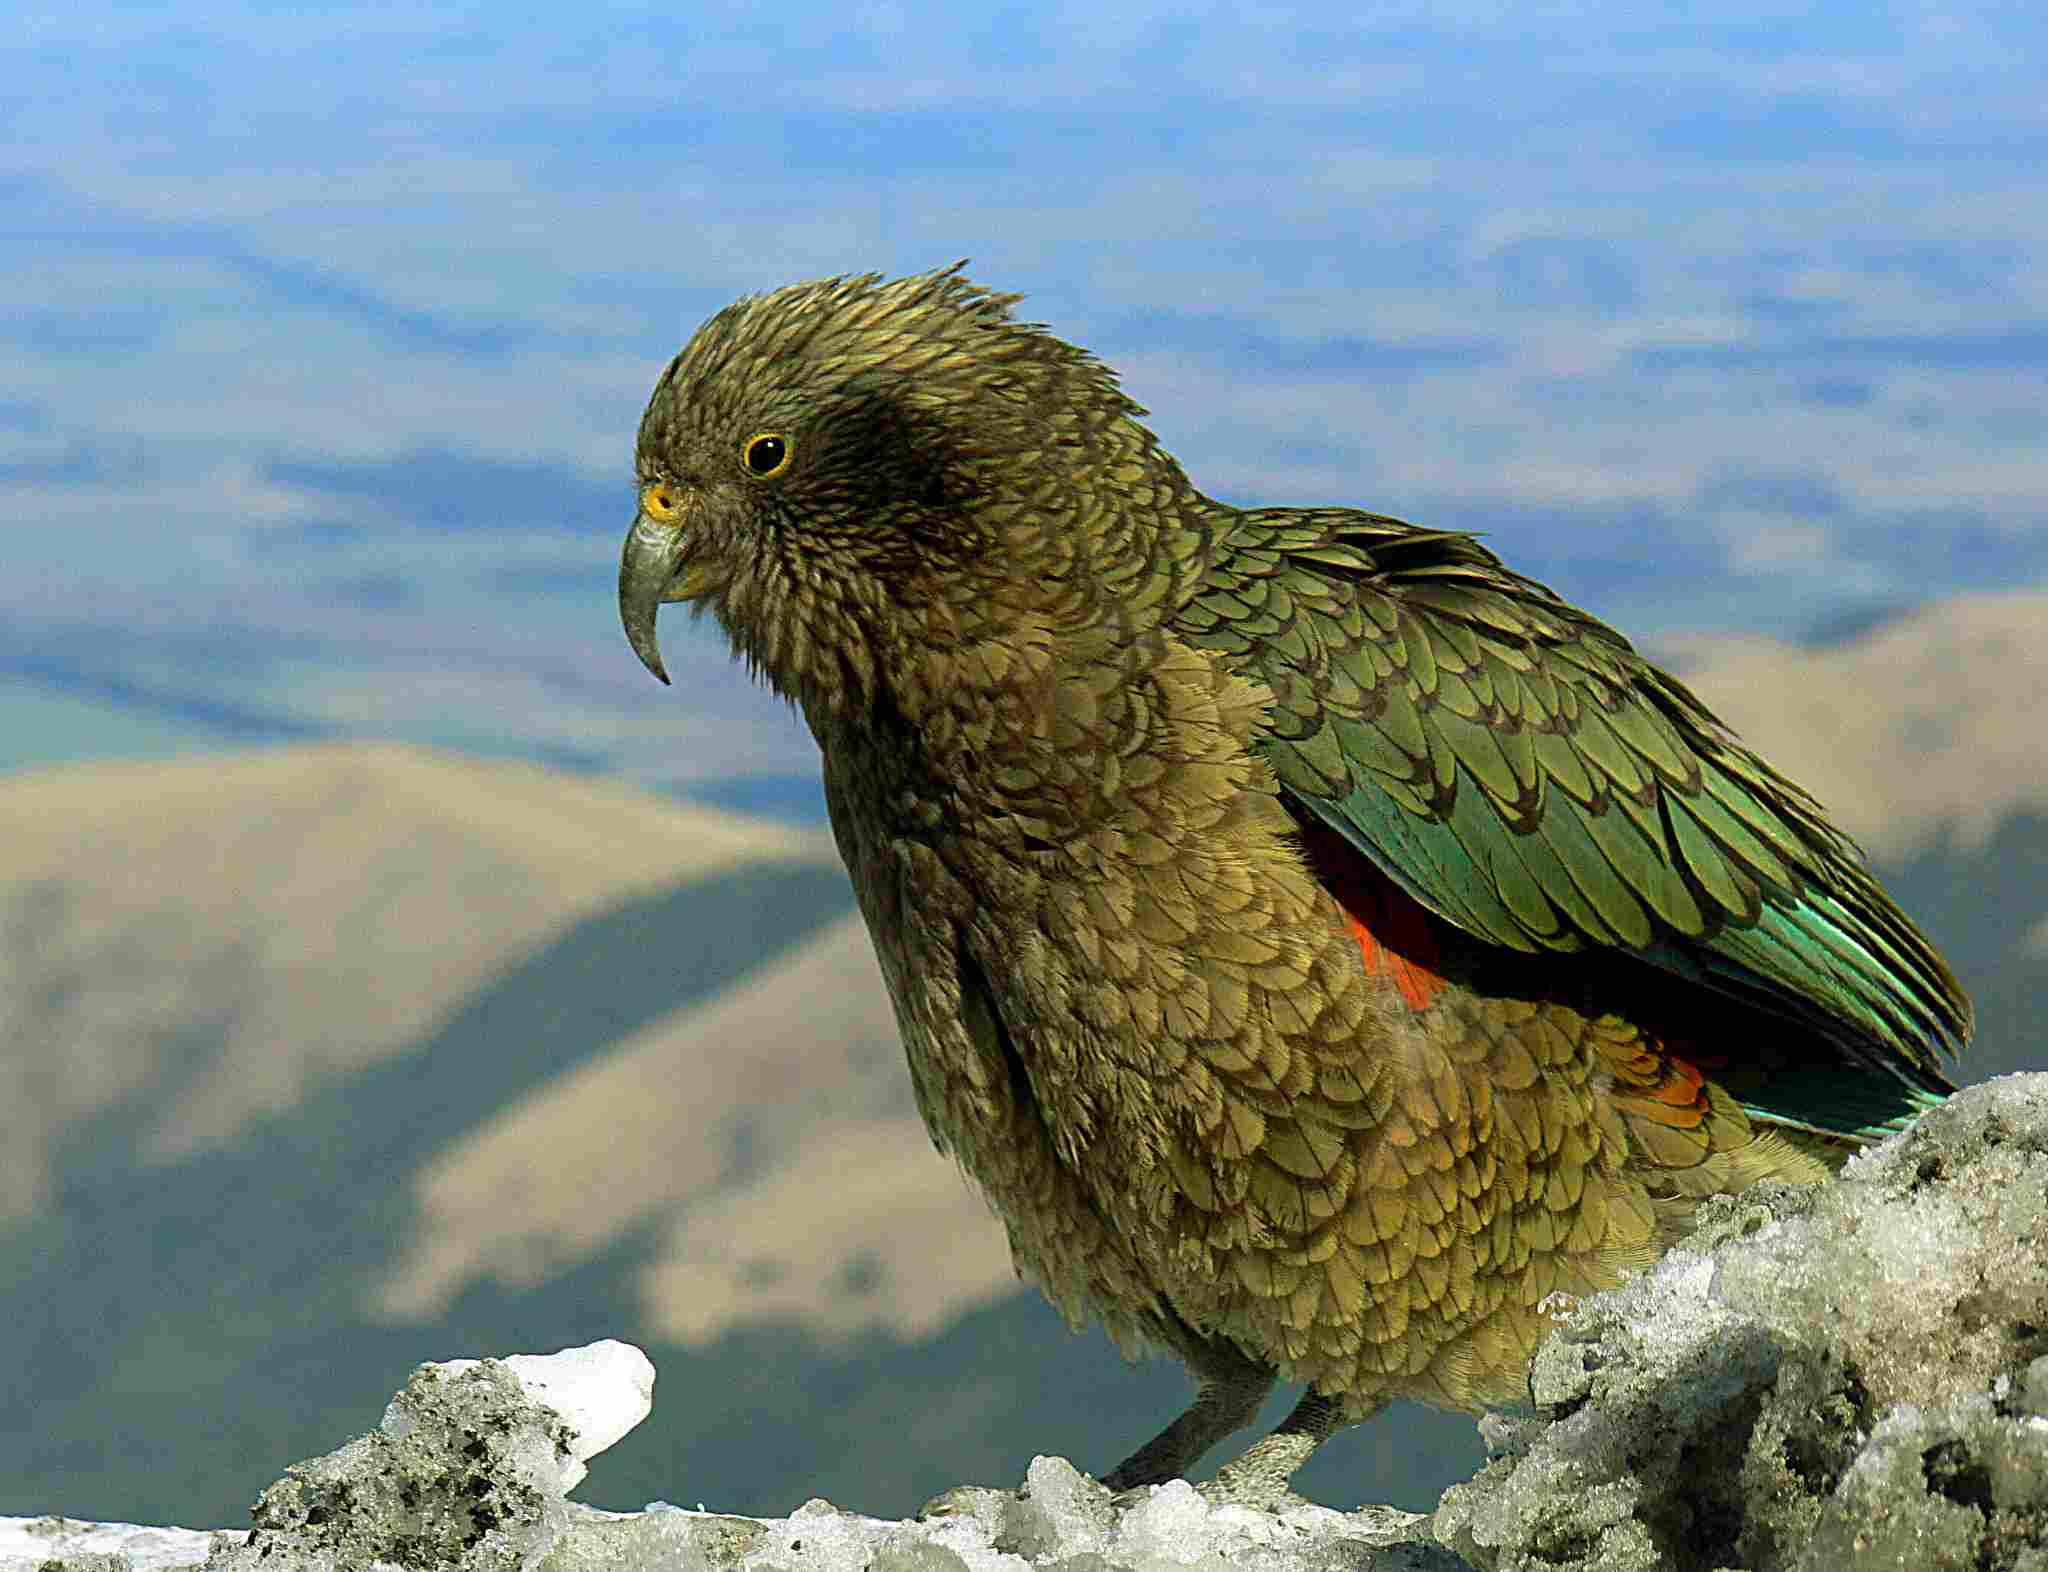 What Eats Parrots: Over 50 Percent of Living Parrot Species are Endangered (Credit: Bernard Spragg. NZ 2007, Uploaded Online 2013)